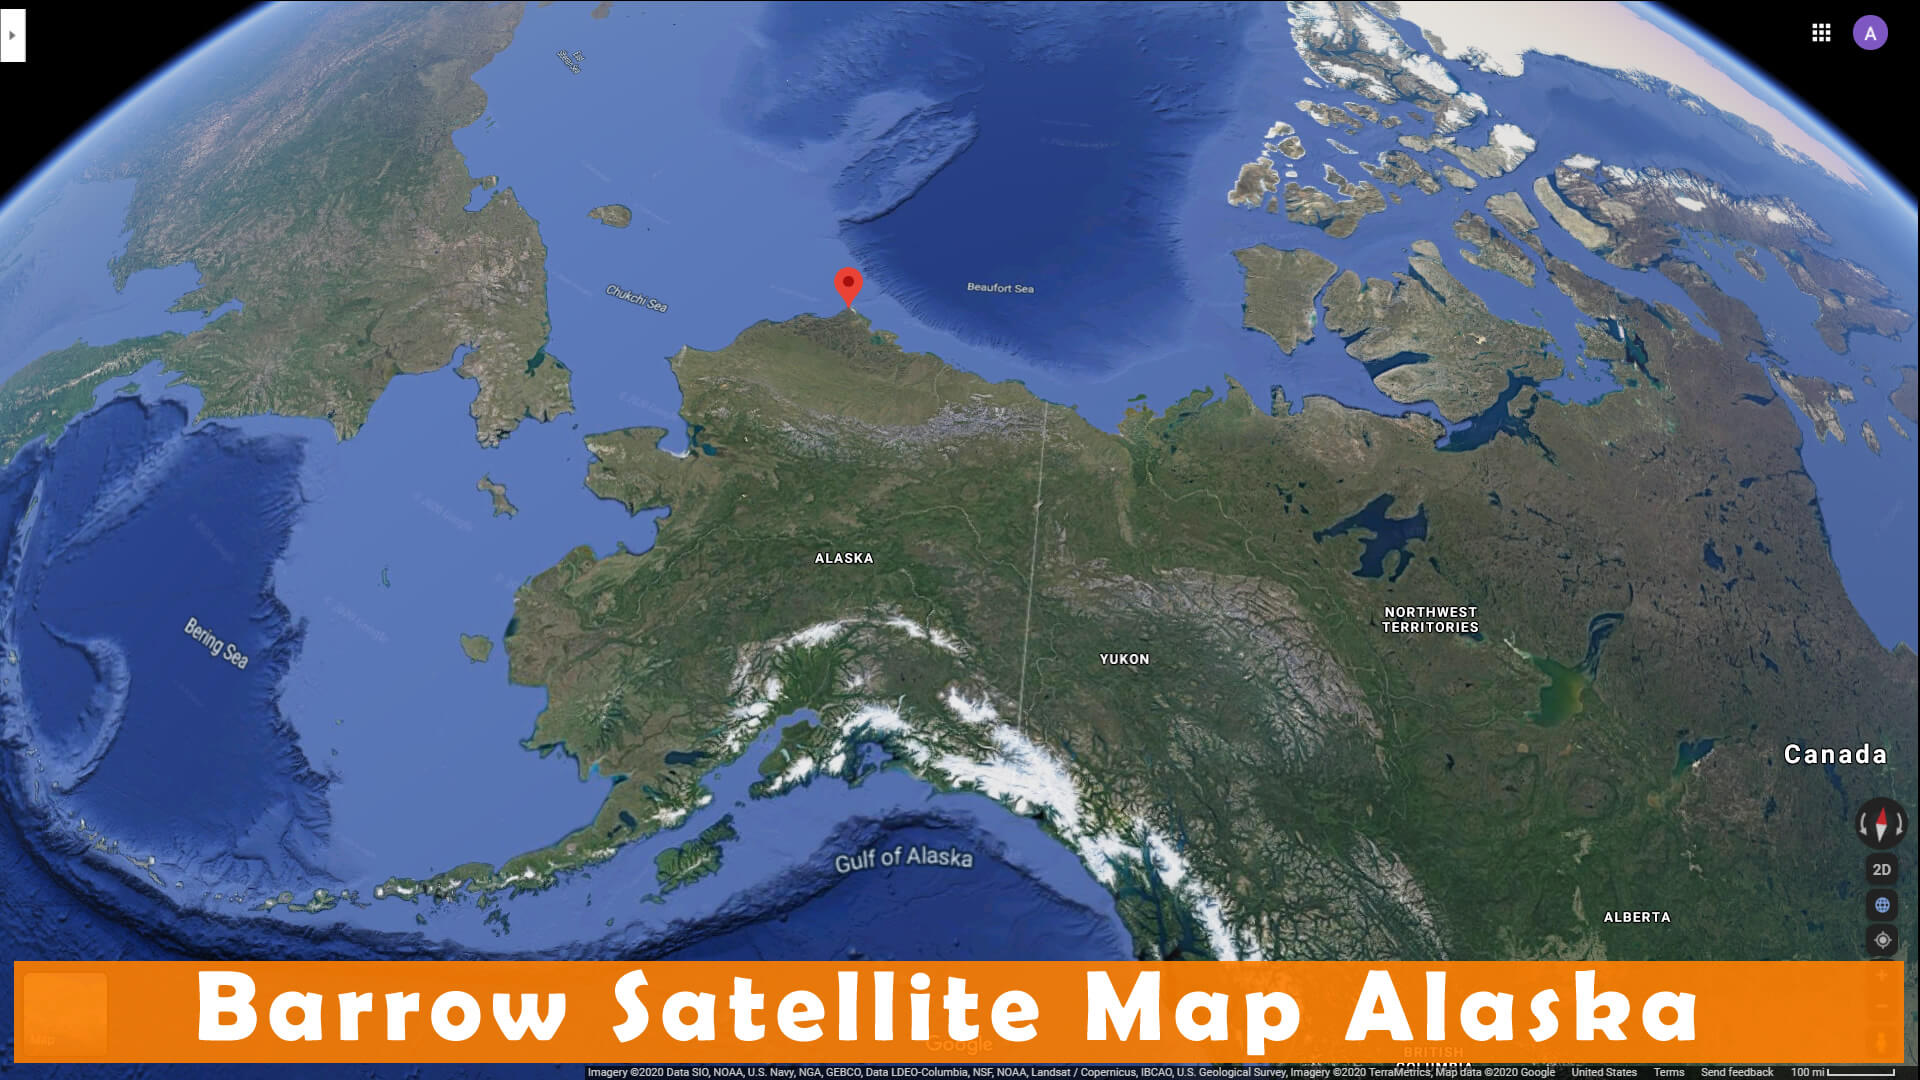 Barrow Satellite Map Alaska